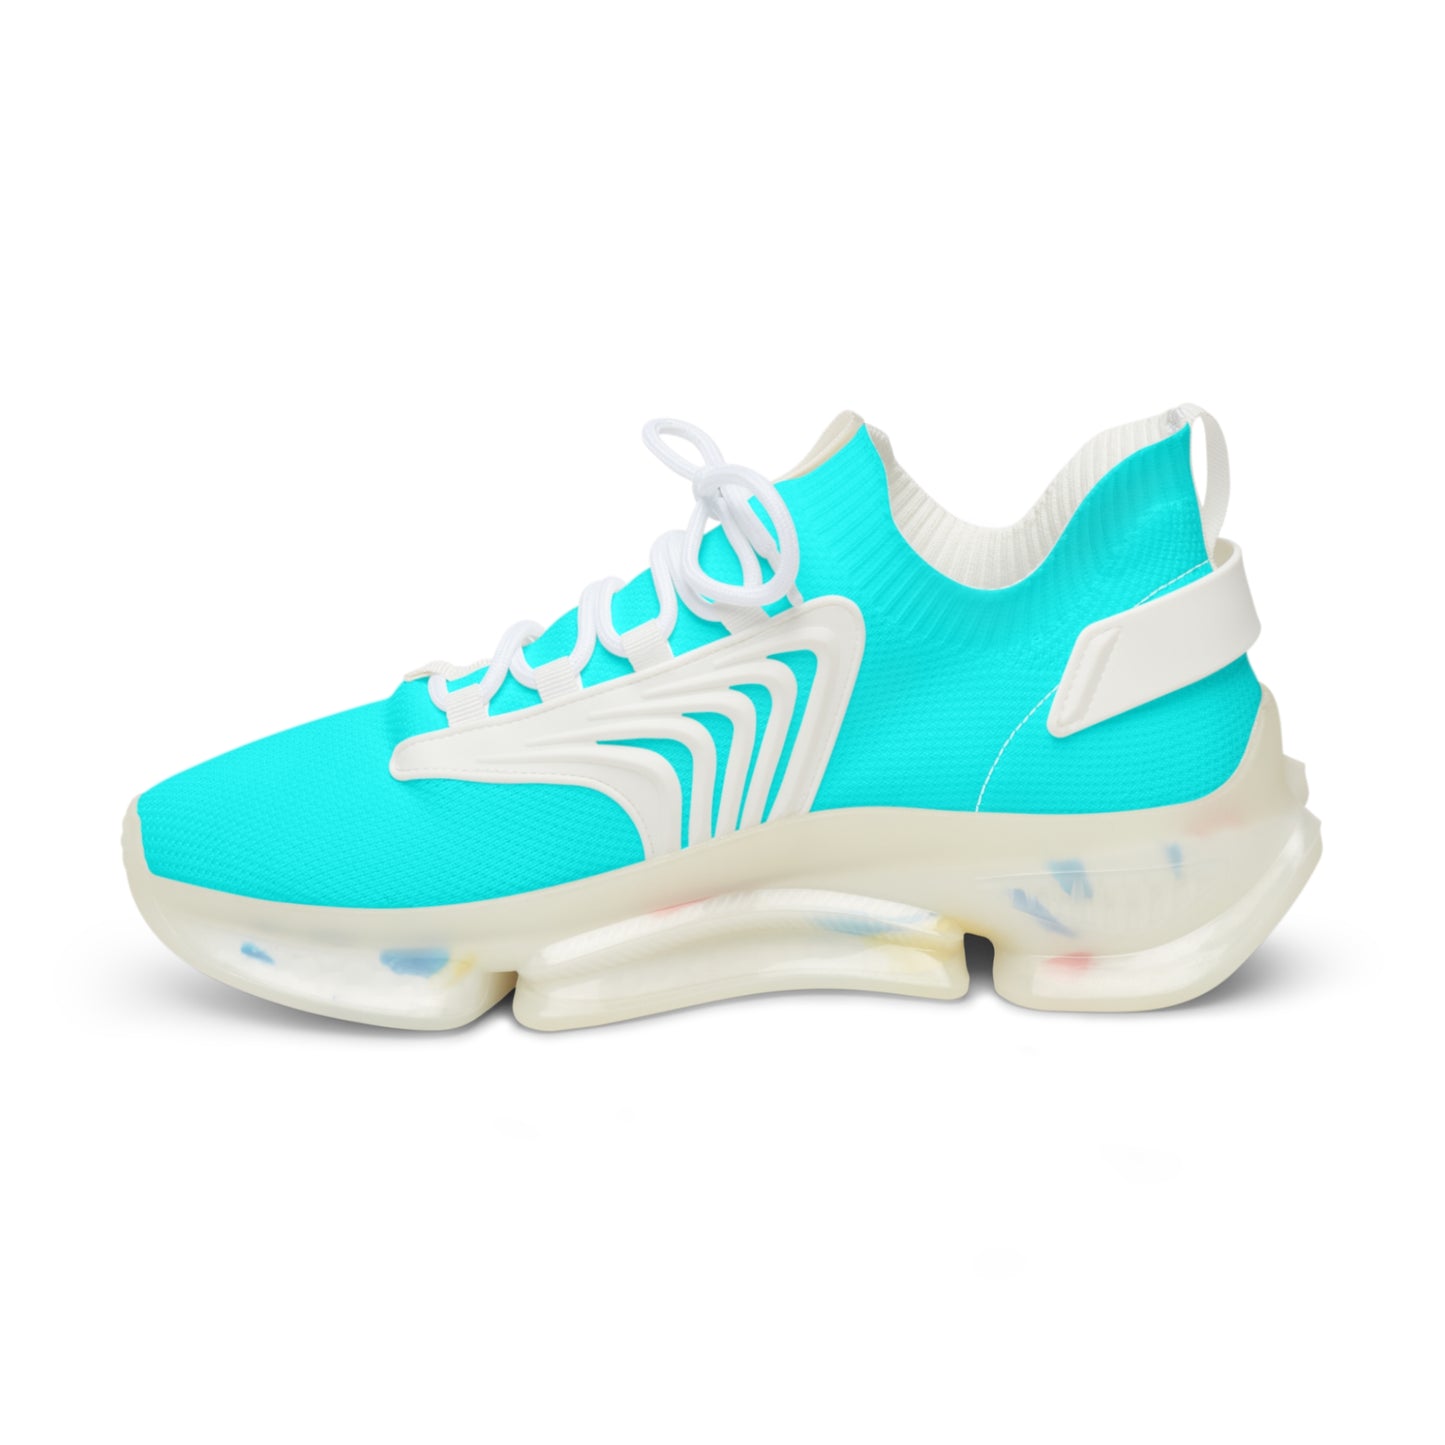 Bright Blue Mesh Sneakers